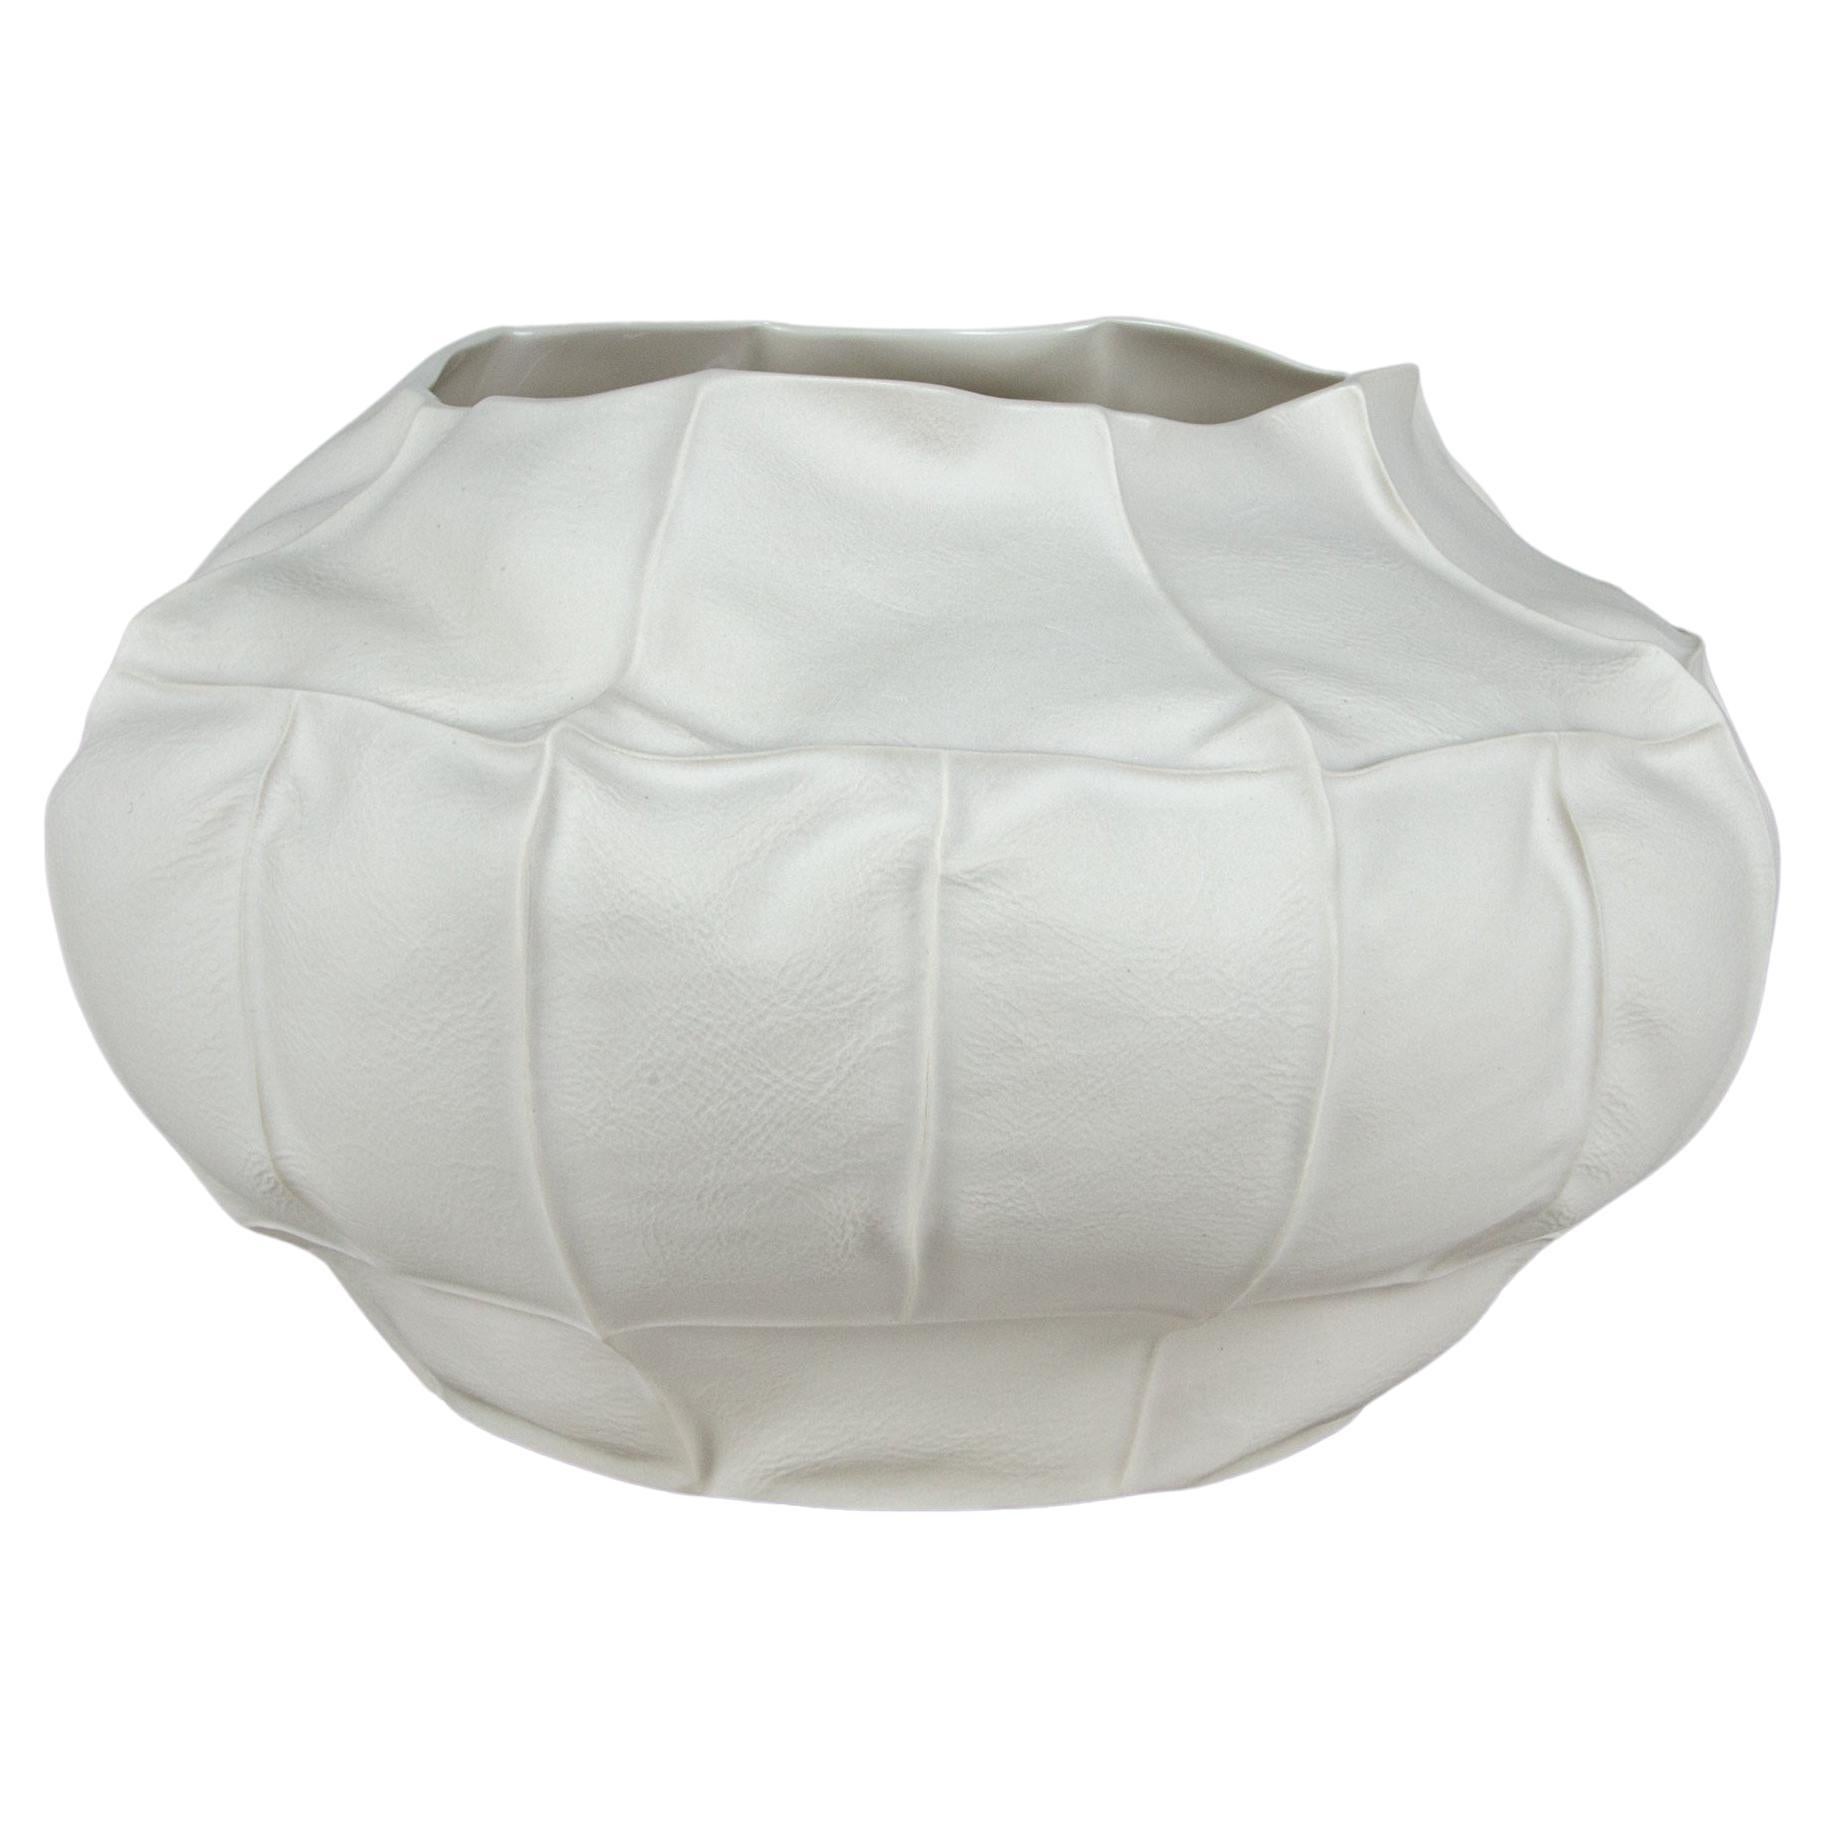 Organic White Ceramic Kawa Vessel, Large 01, Leather Cast Porcelain Vase